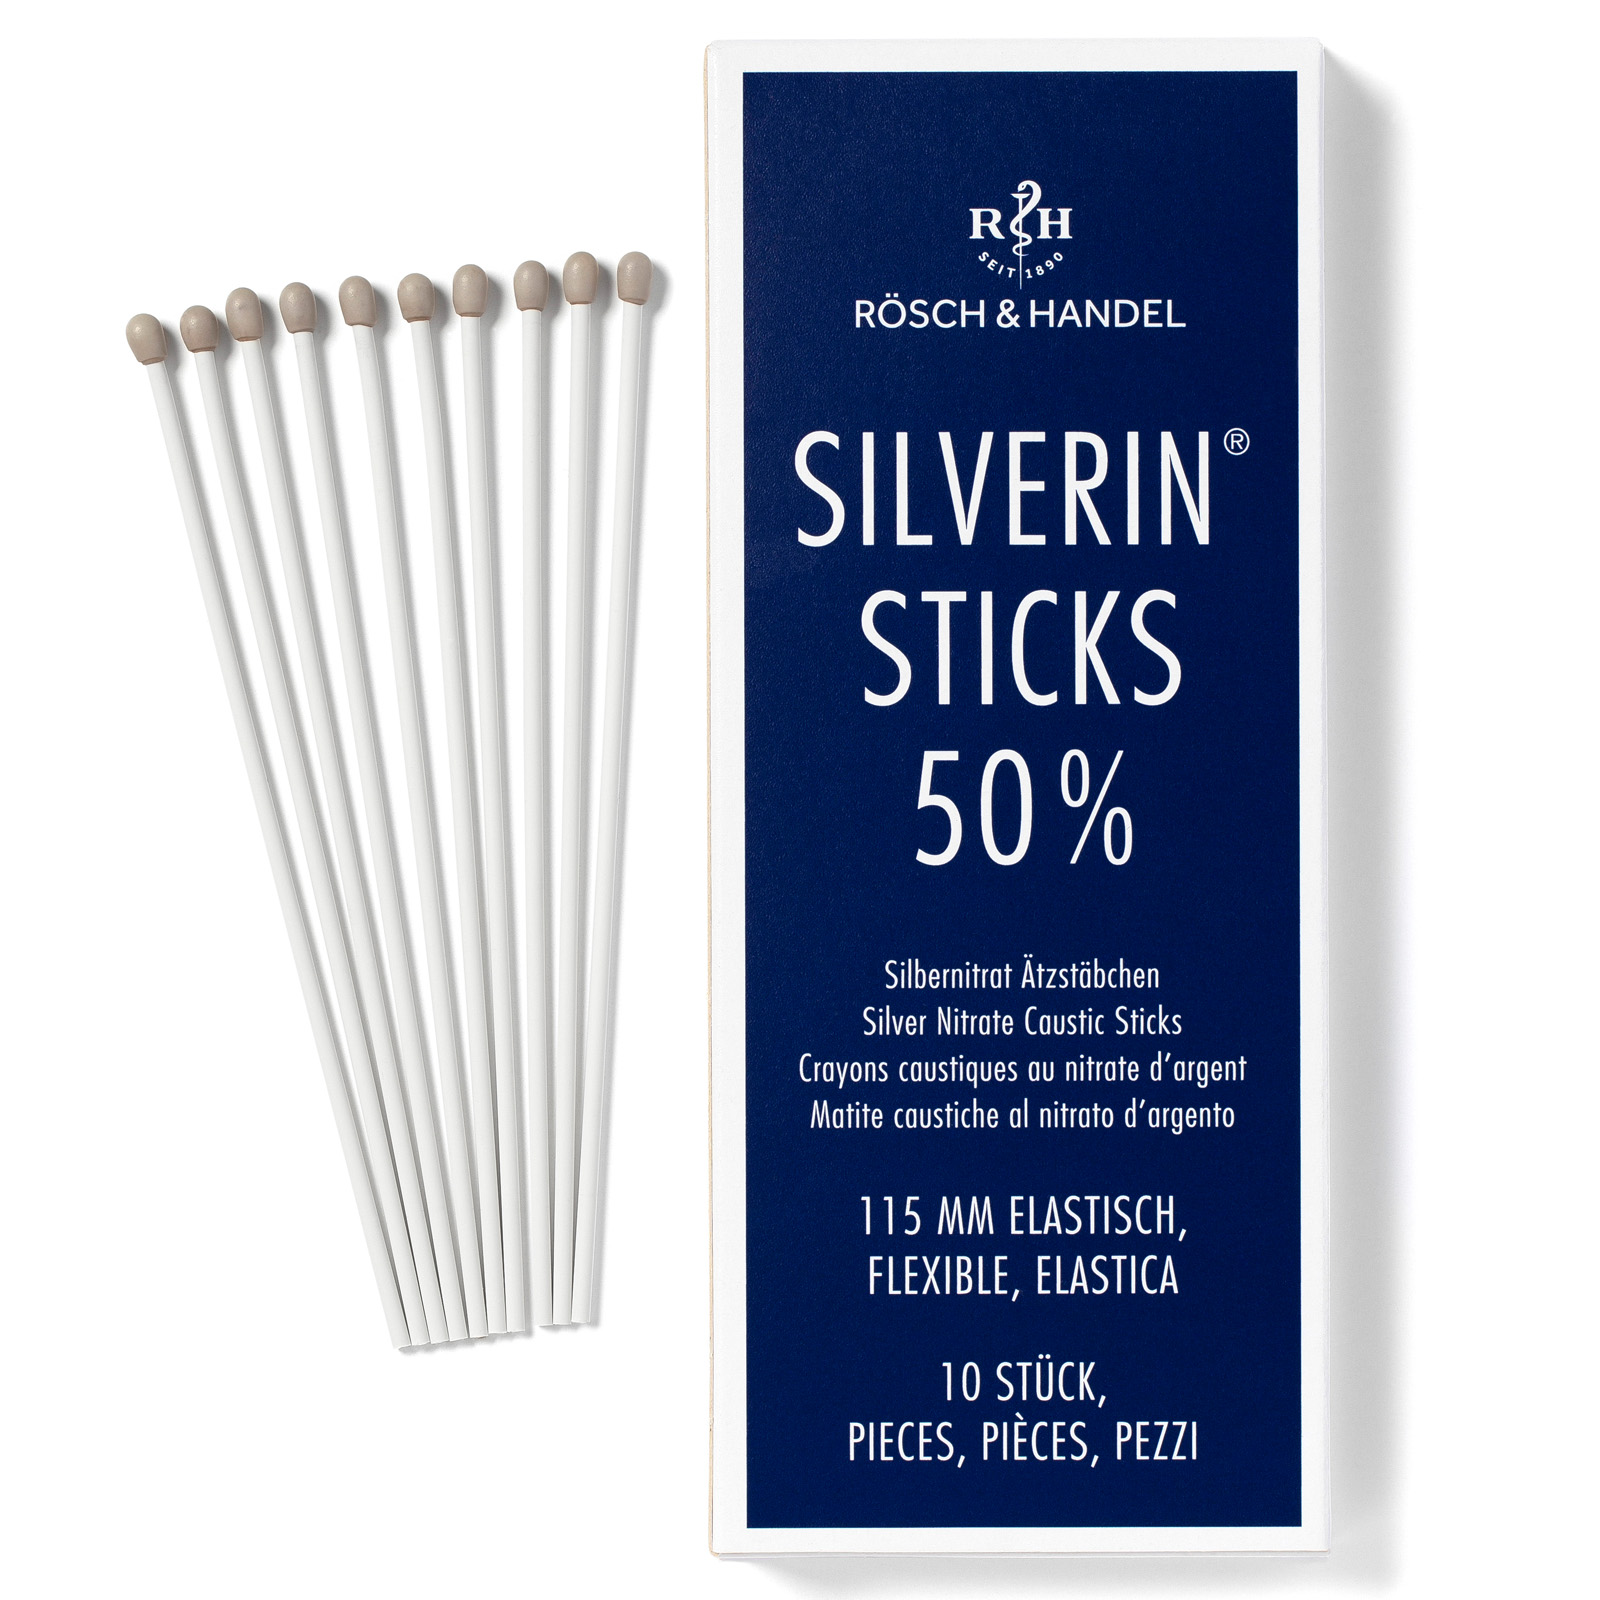 SILVERIN Sticks 50% met zilvernitraat